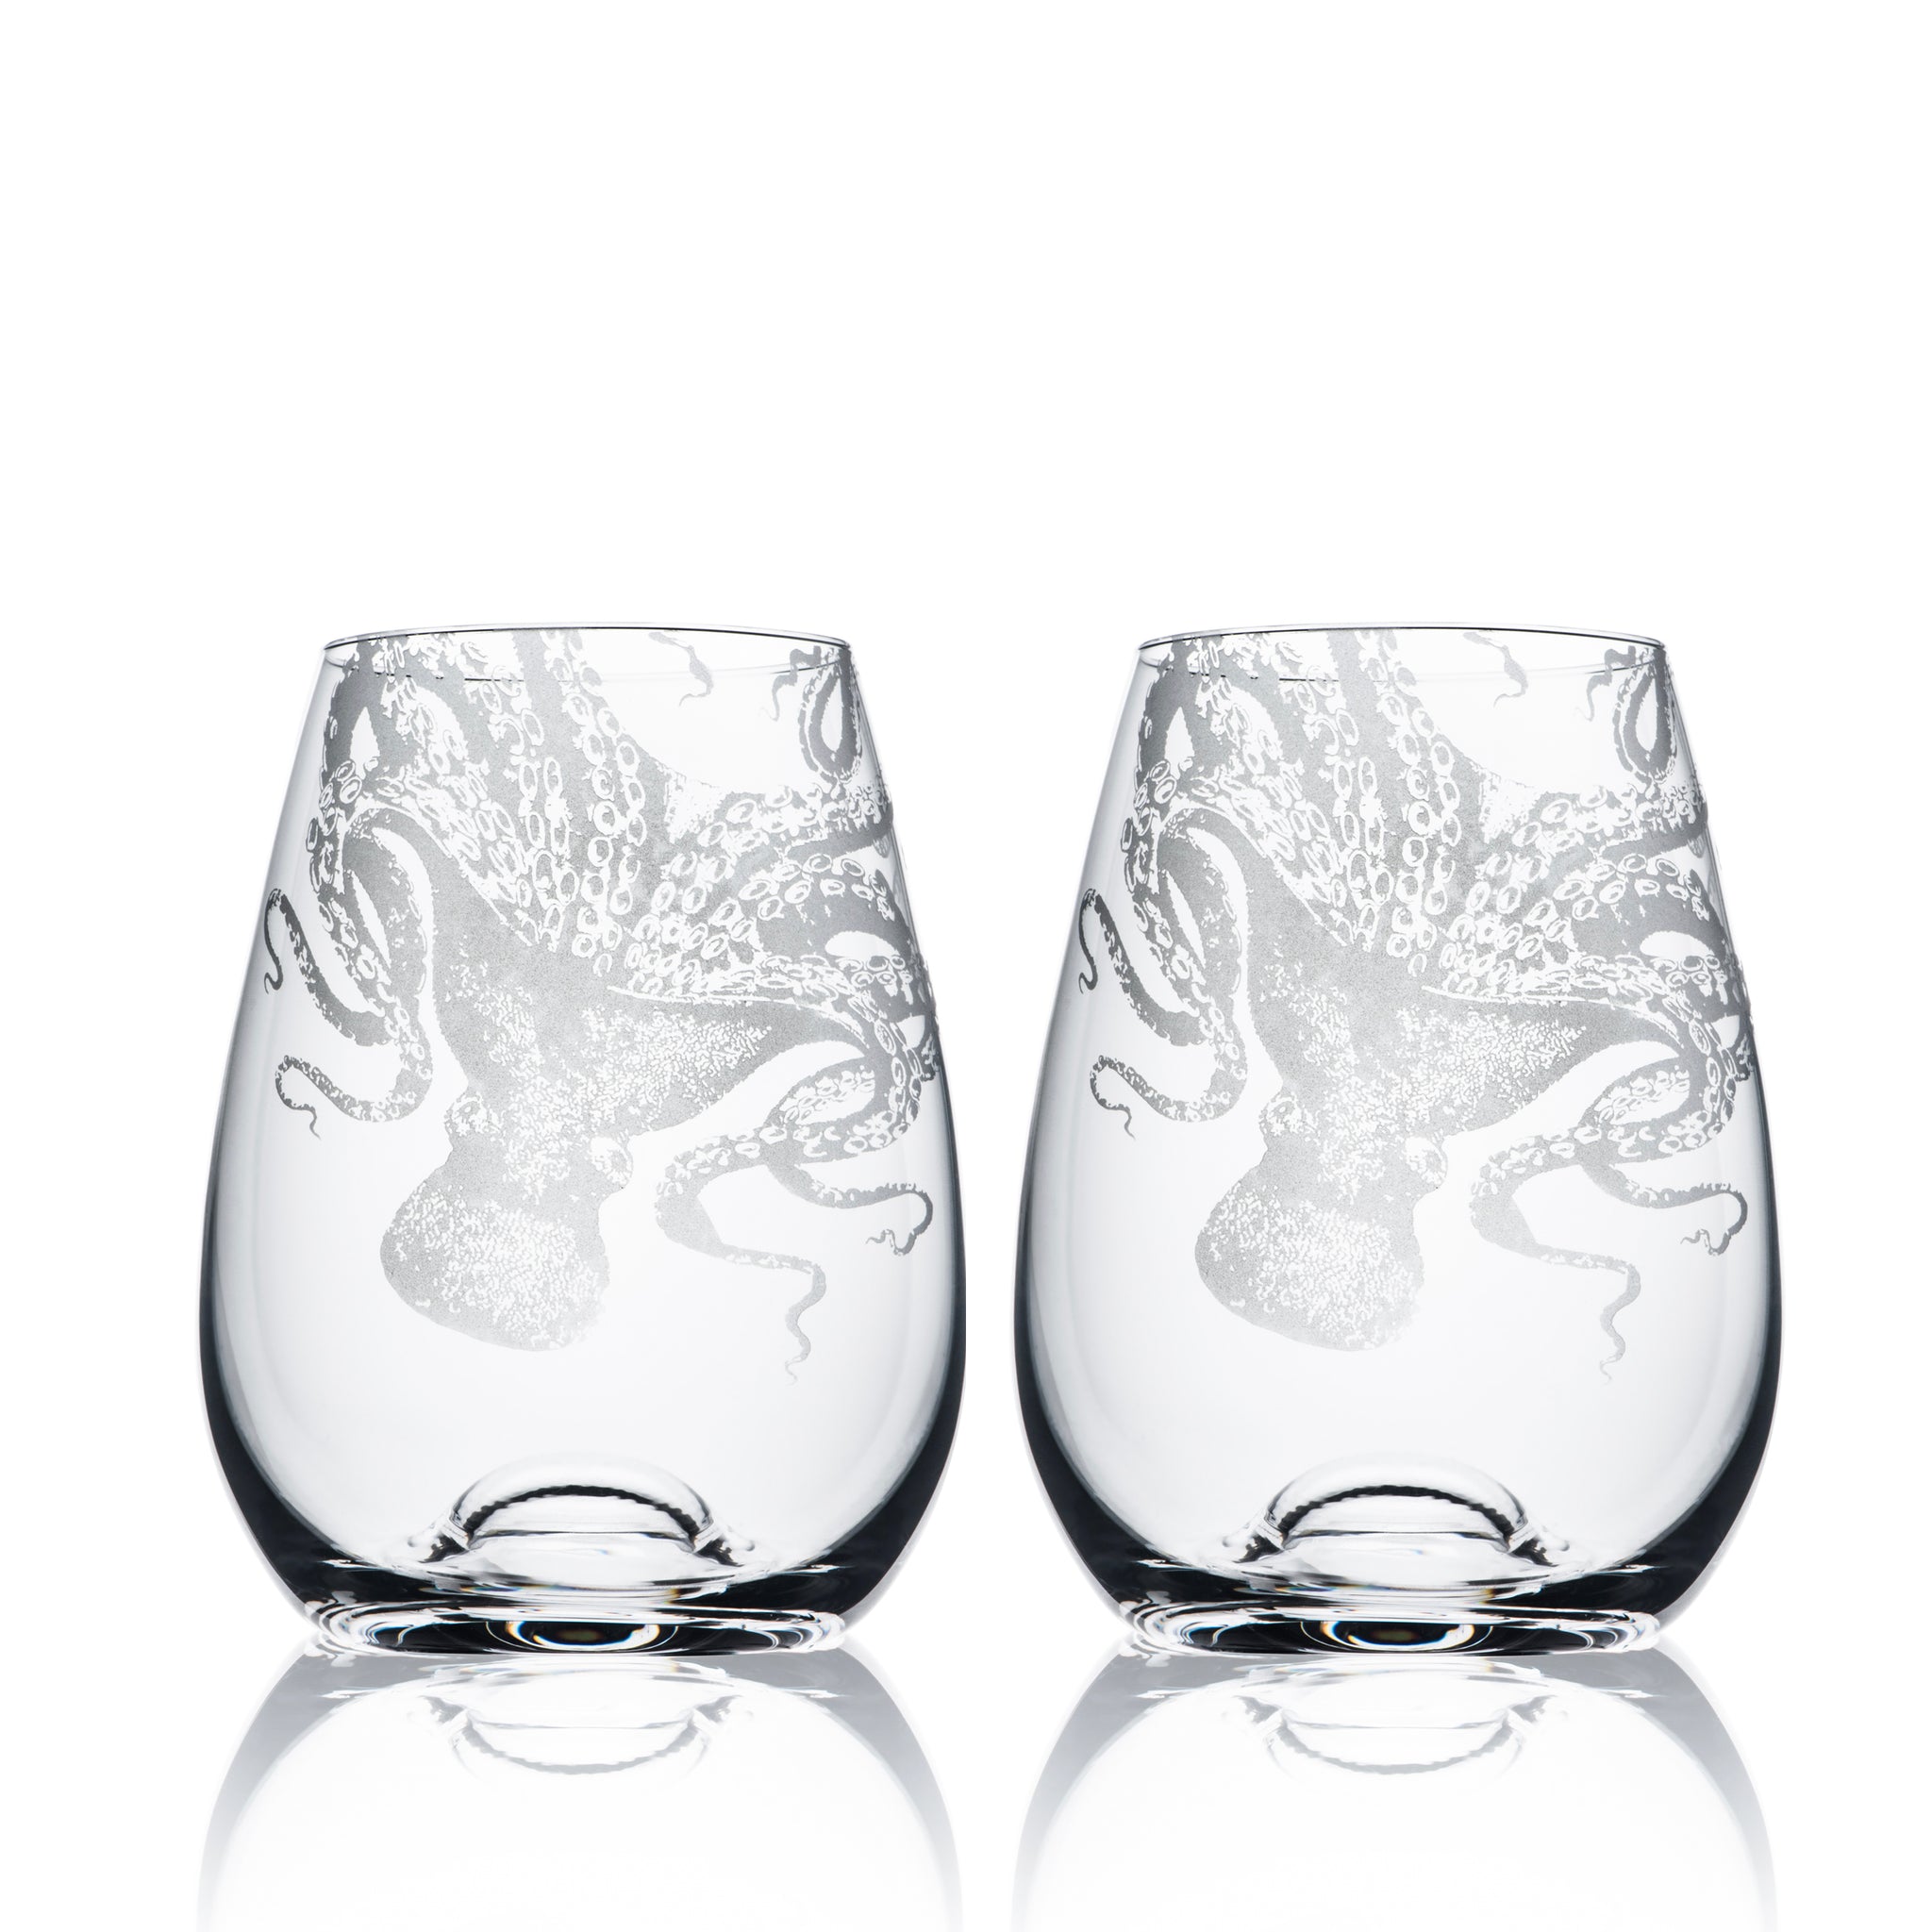 Caskata Lucy Stemless Wine Glasses Set of 2